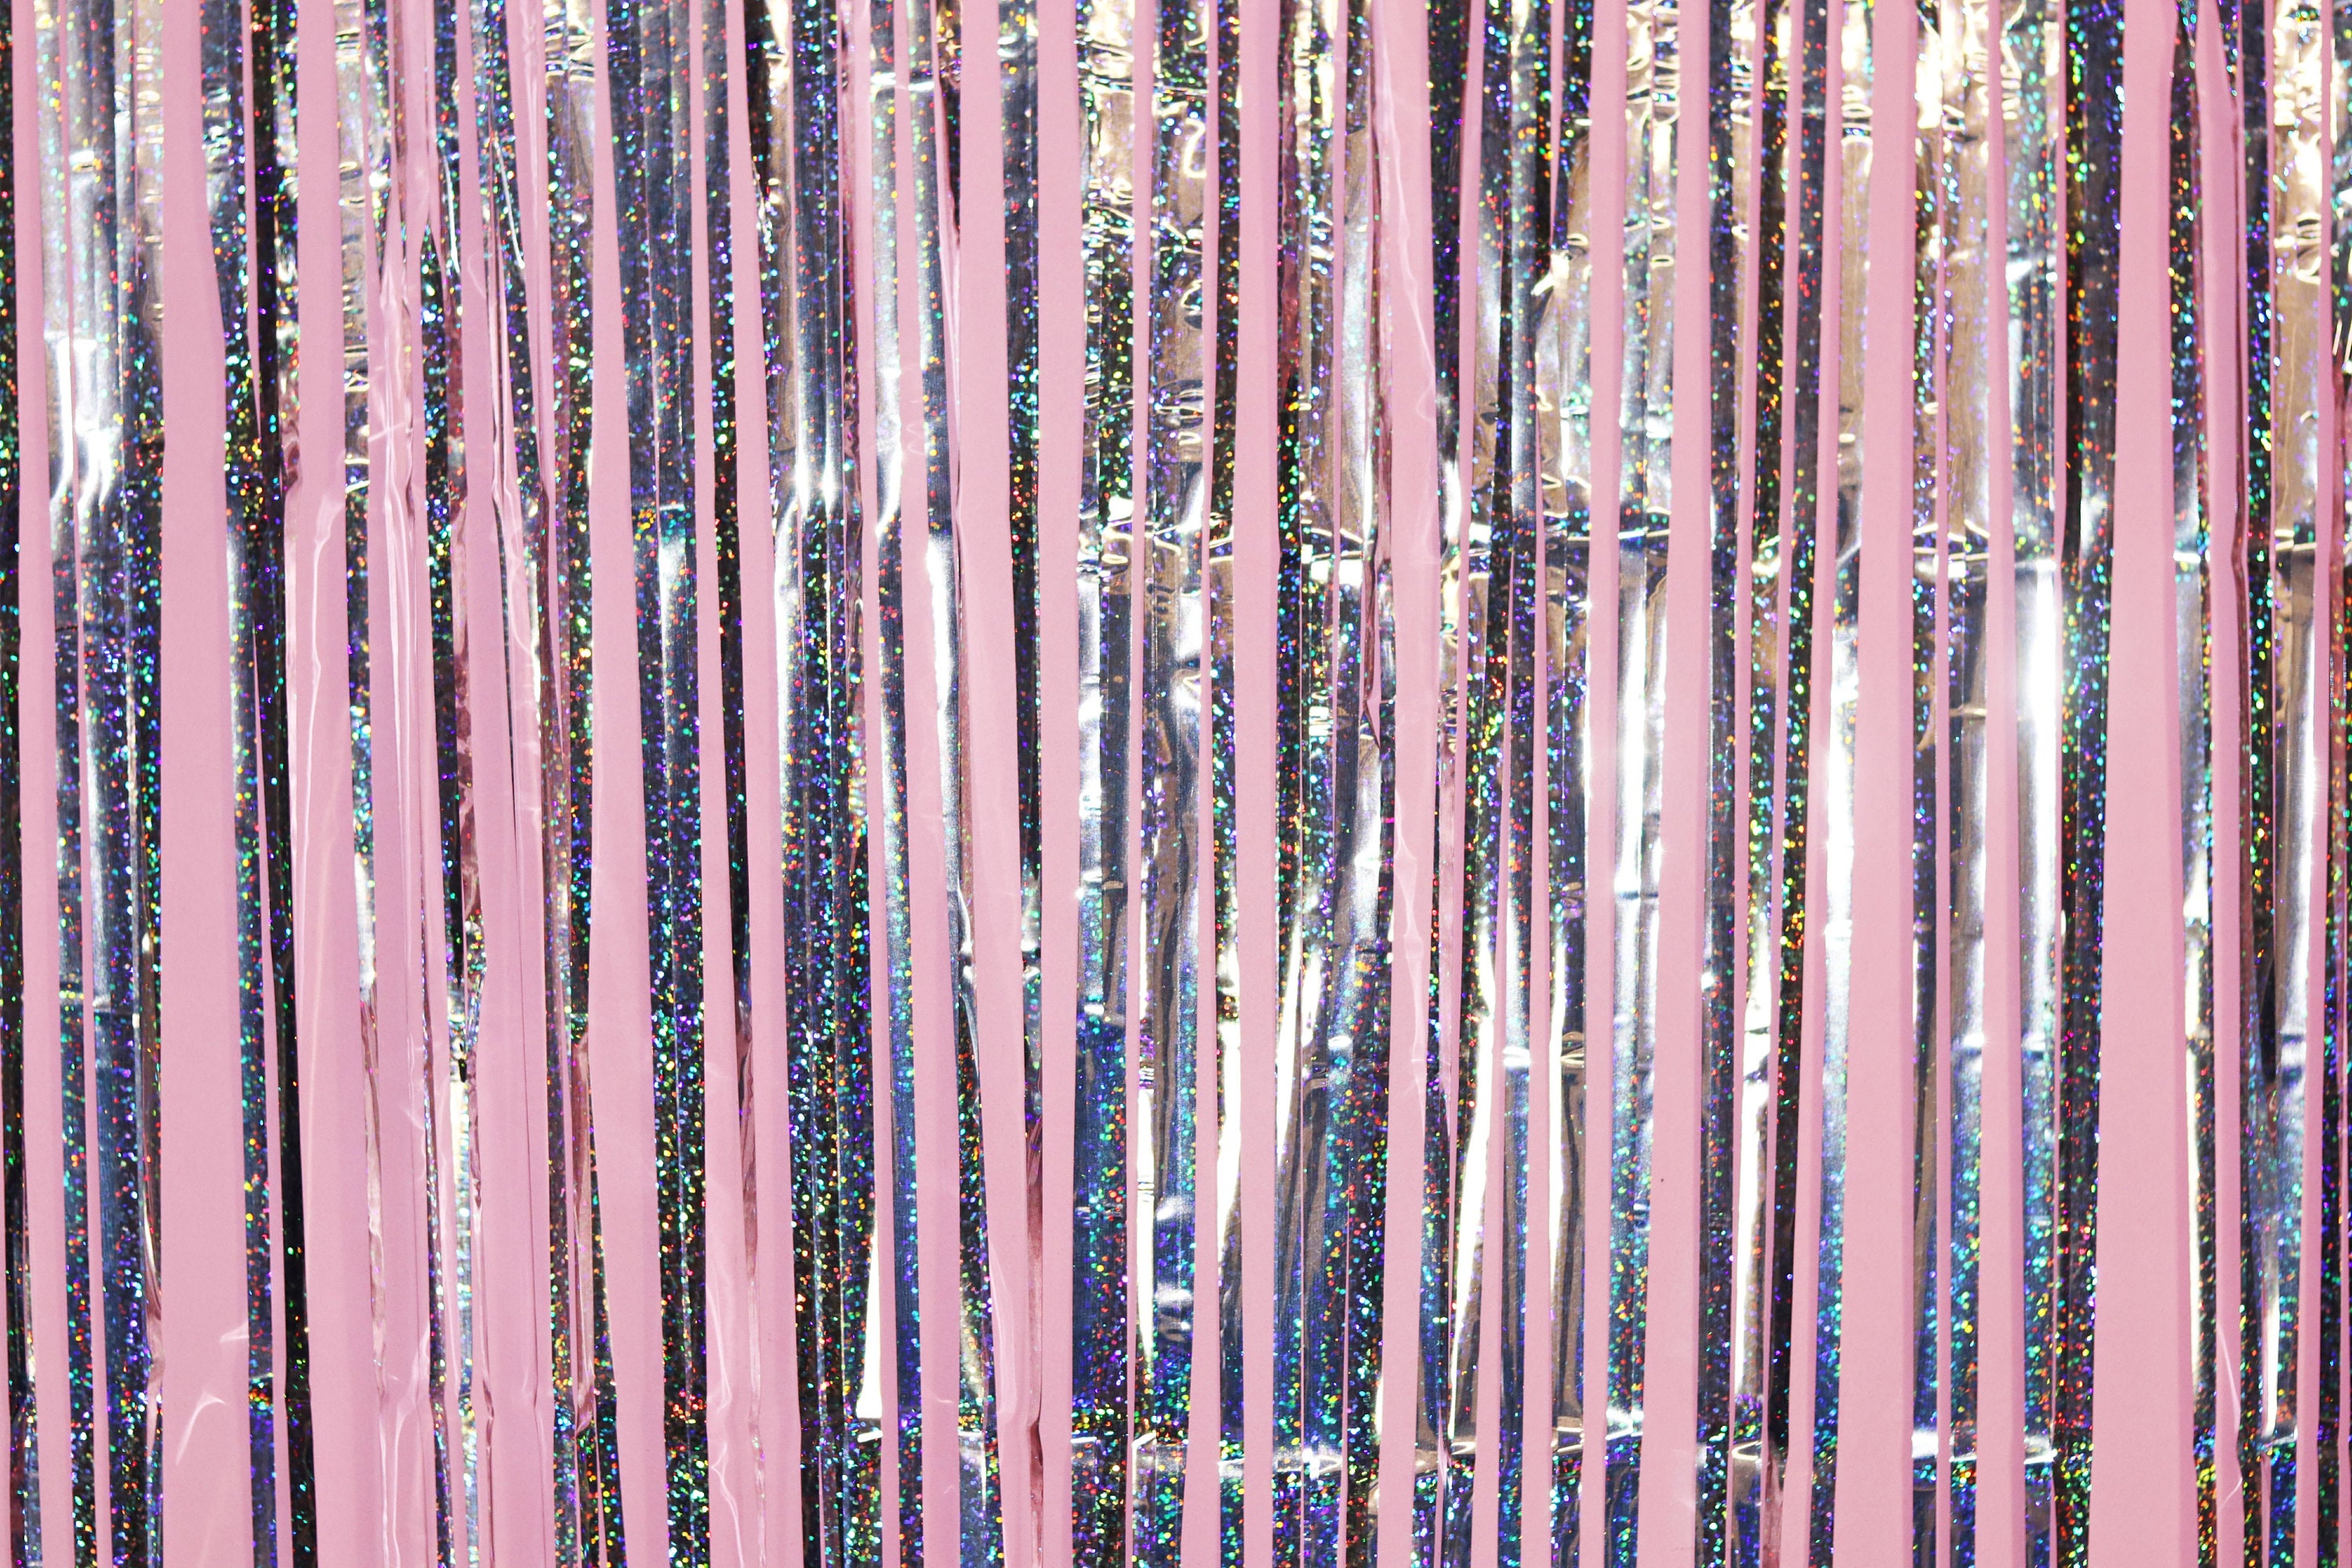 3pk Gold Fringe Party Decorations Foil Metallic Door Curtain St Patricks  Day 3x8